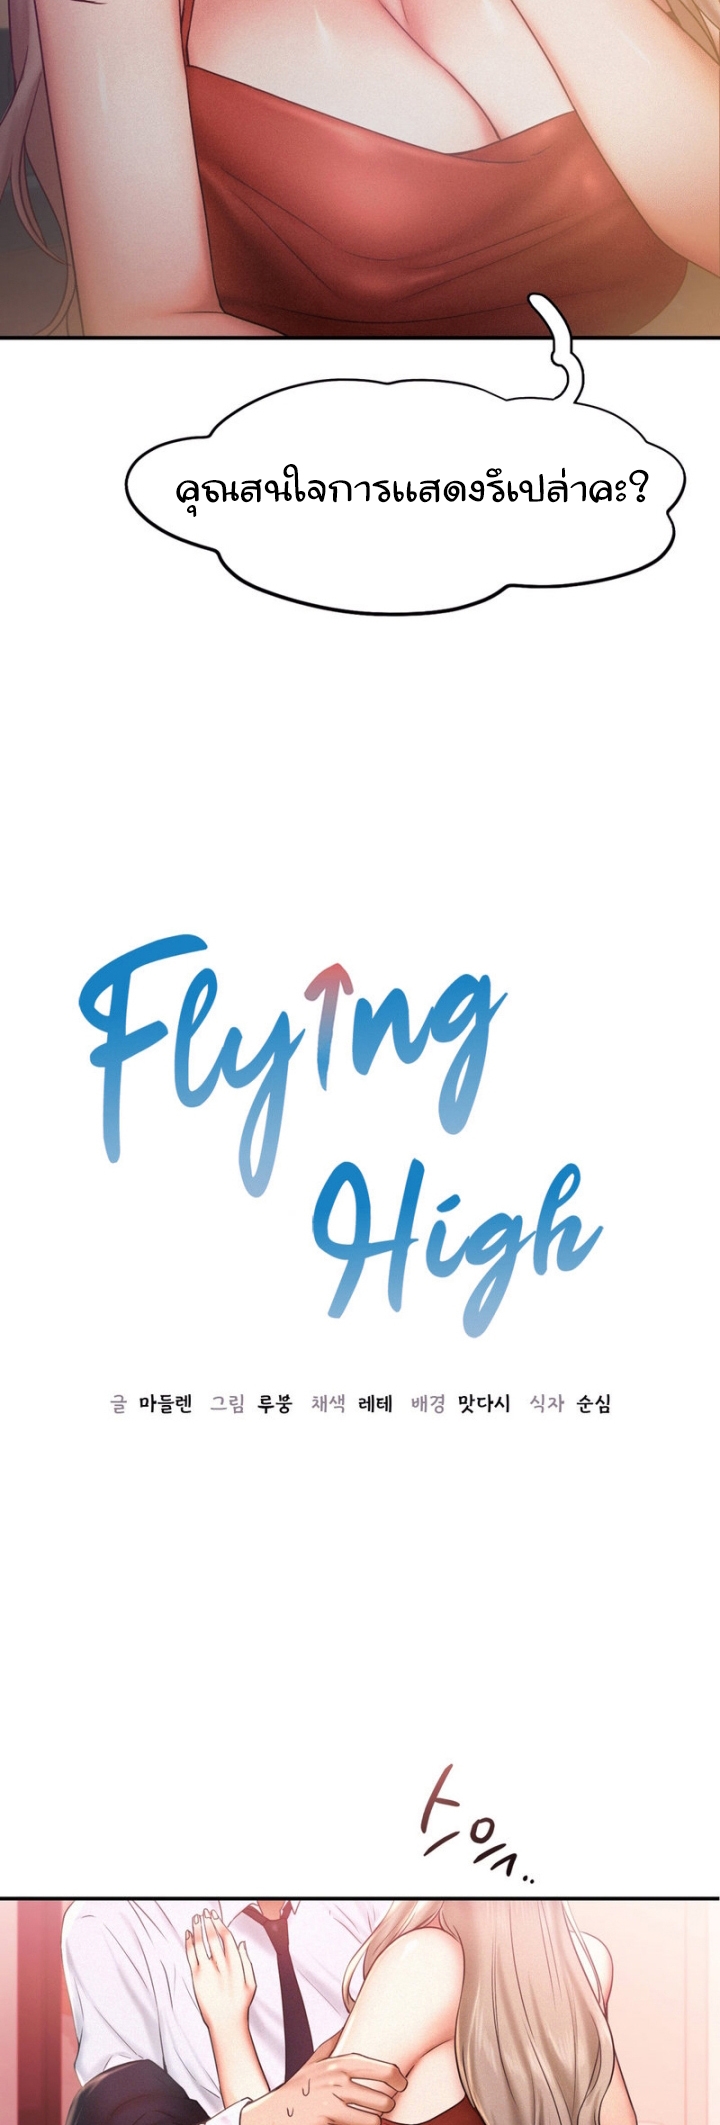 Flying High 15 (3)